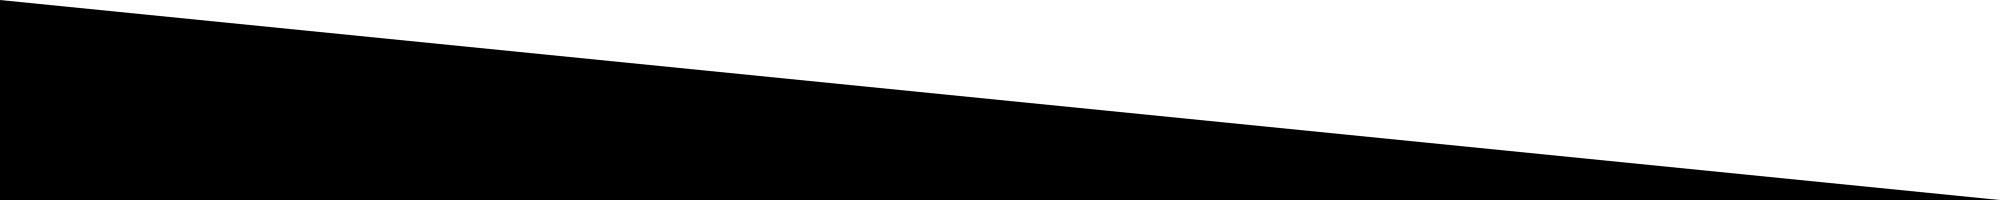 White to black background image